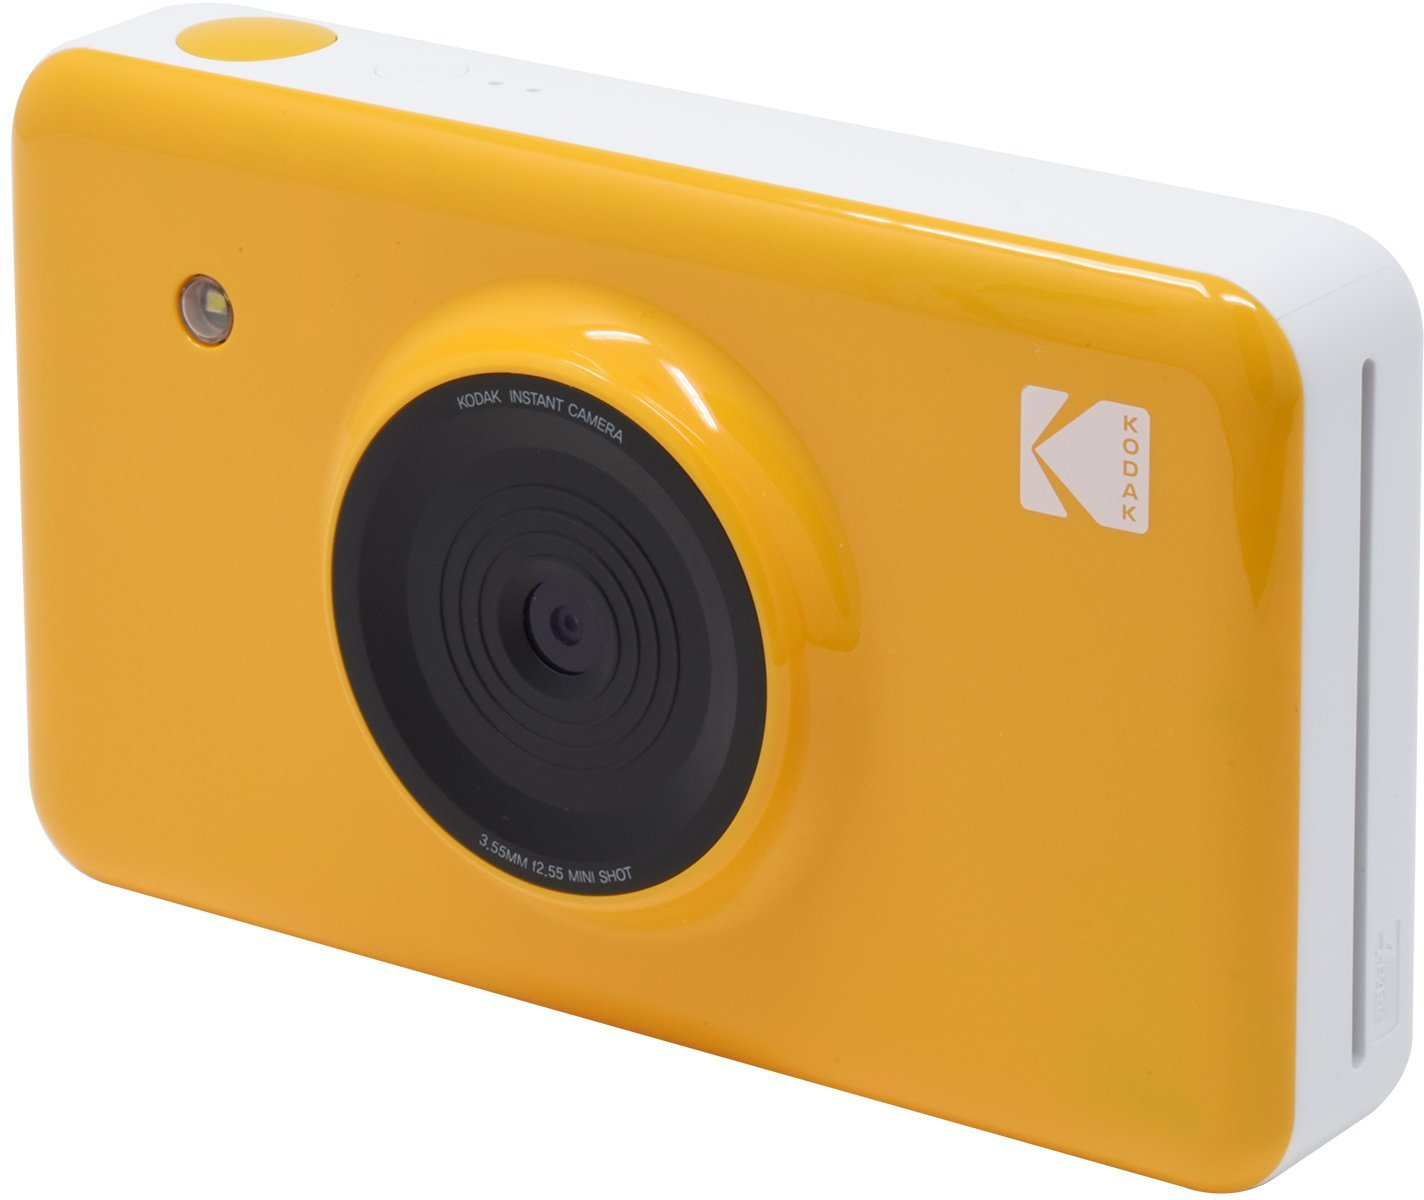 Kodak Mini Shot impresiones de 5 x 7.6 cm con 4 pass tecnología patentada digital 2 1 54 86 ms210